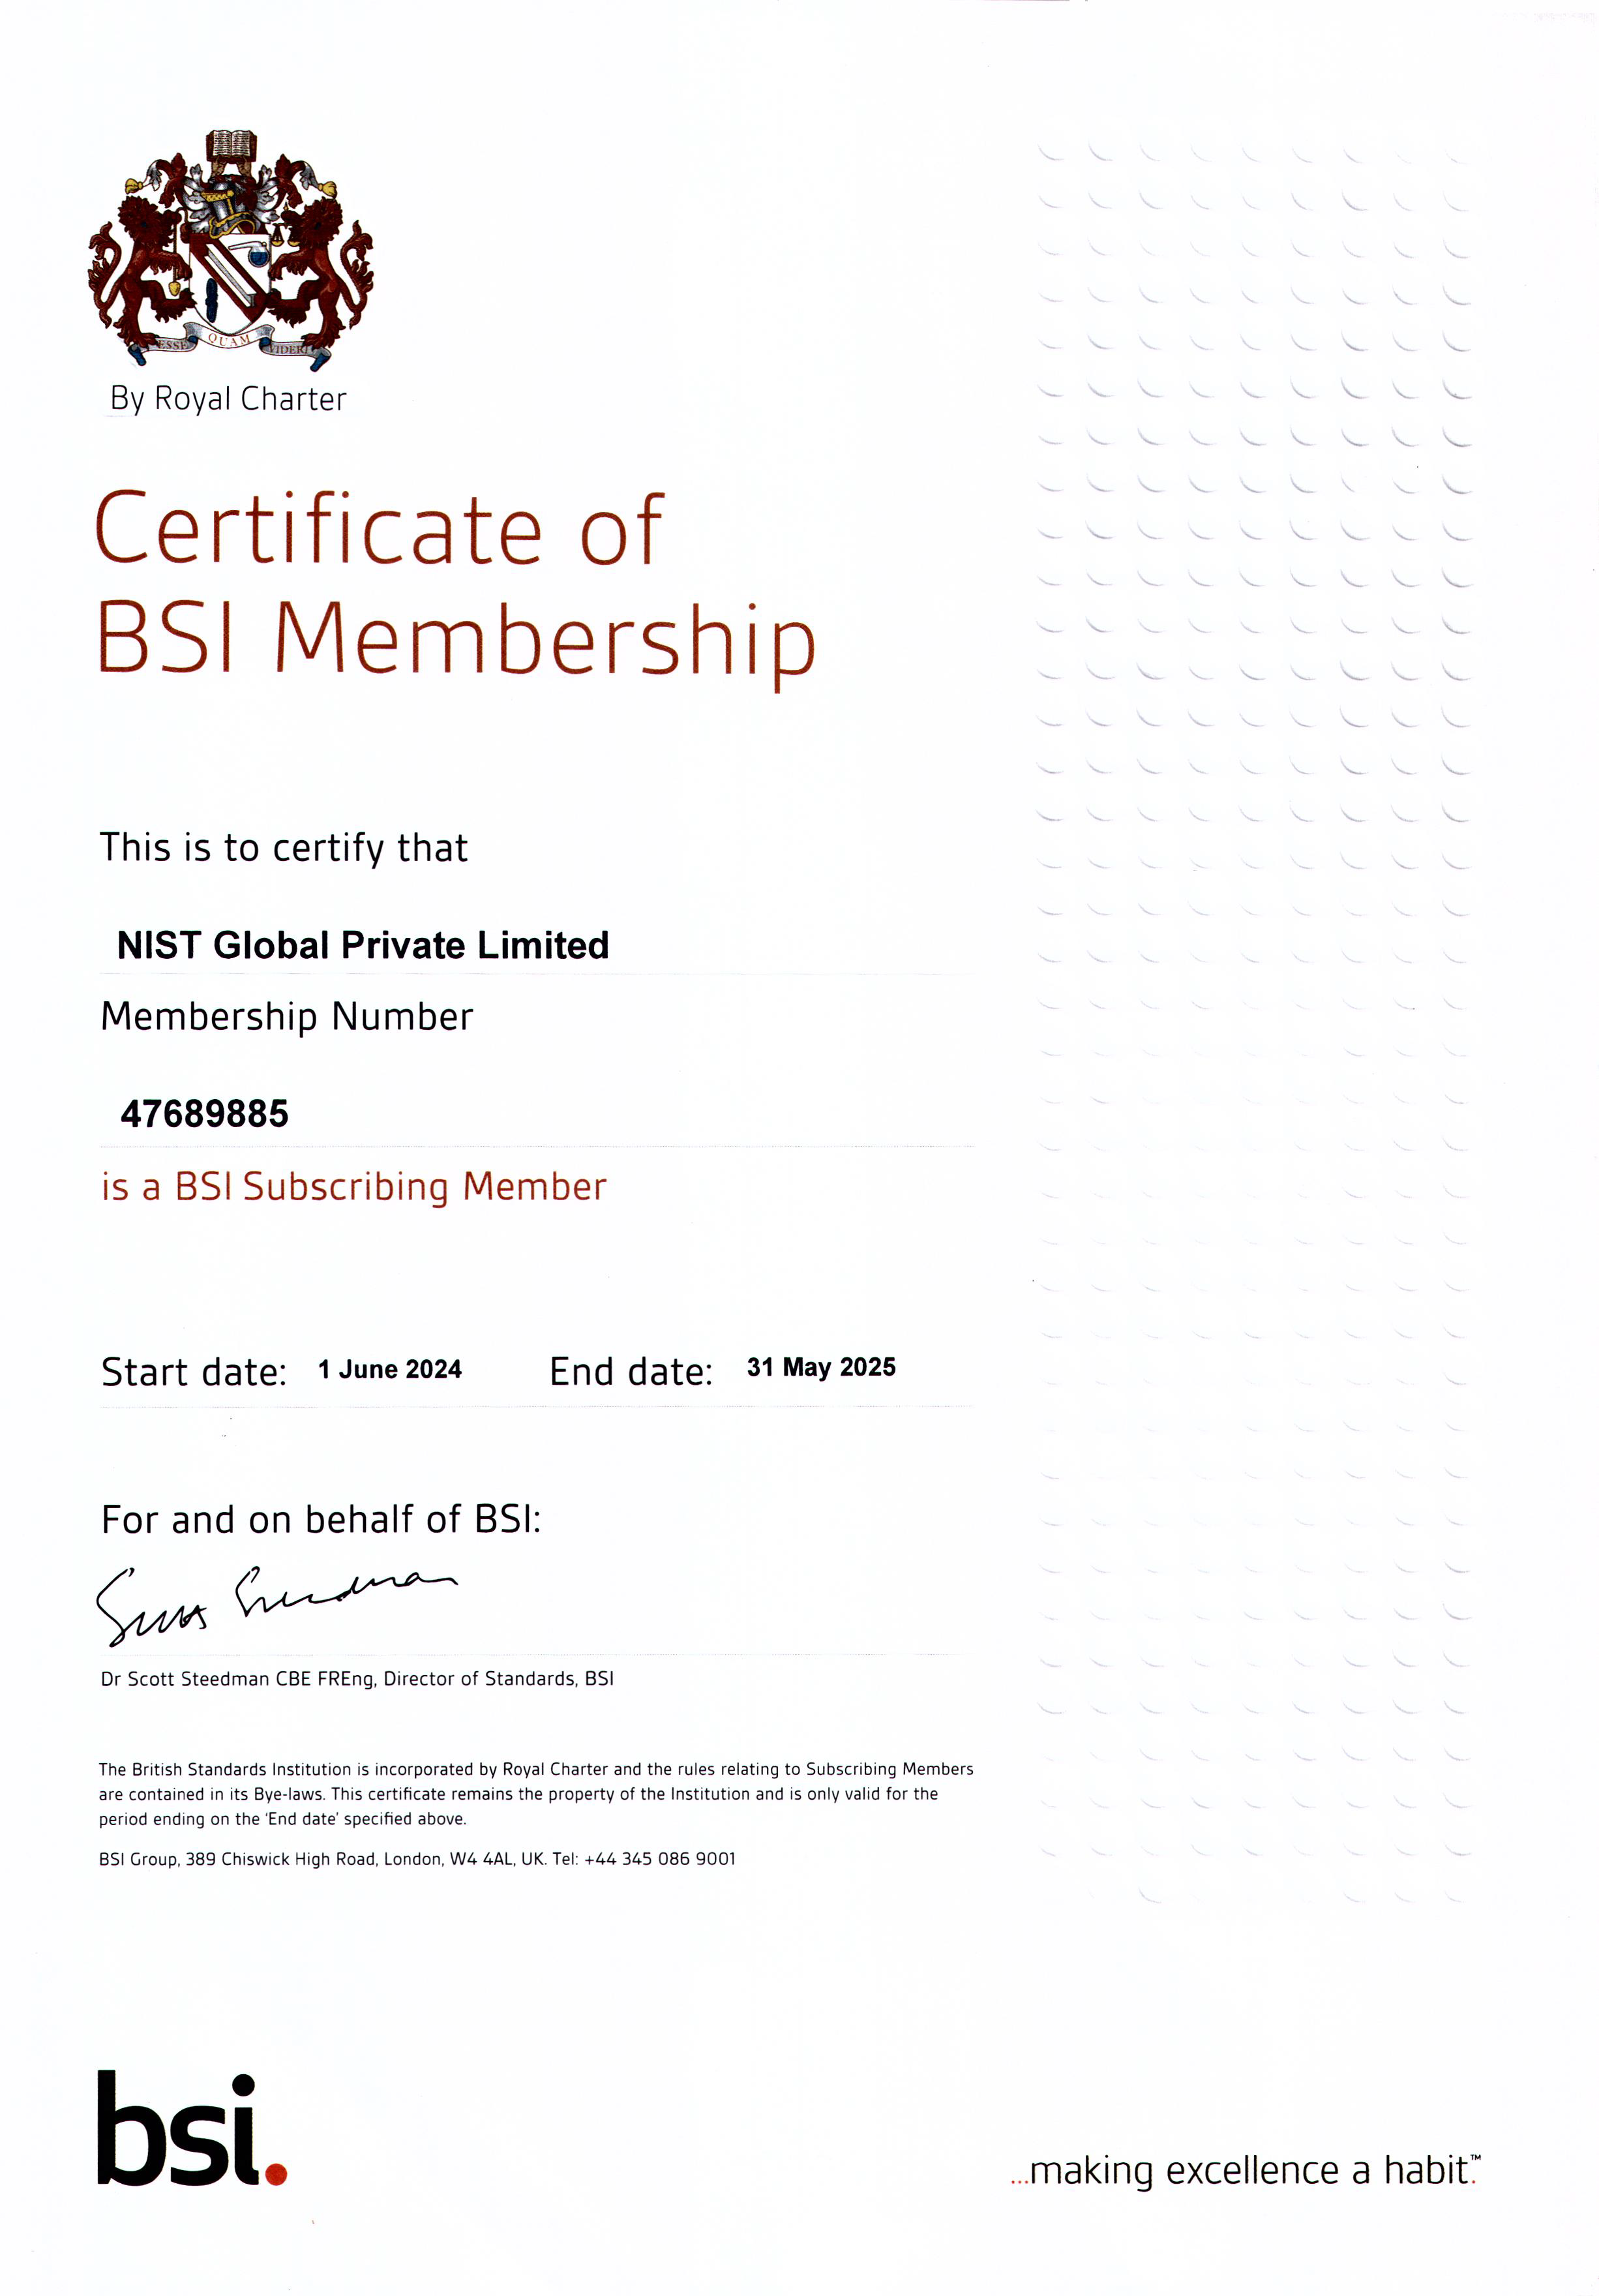 bsi-certificate